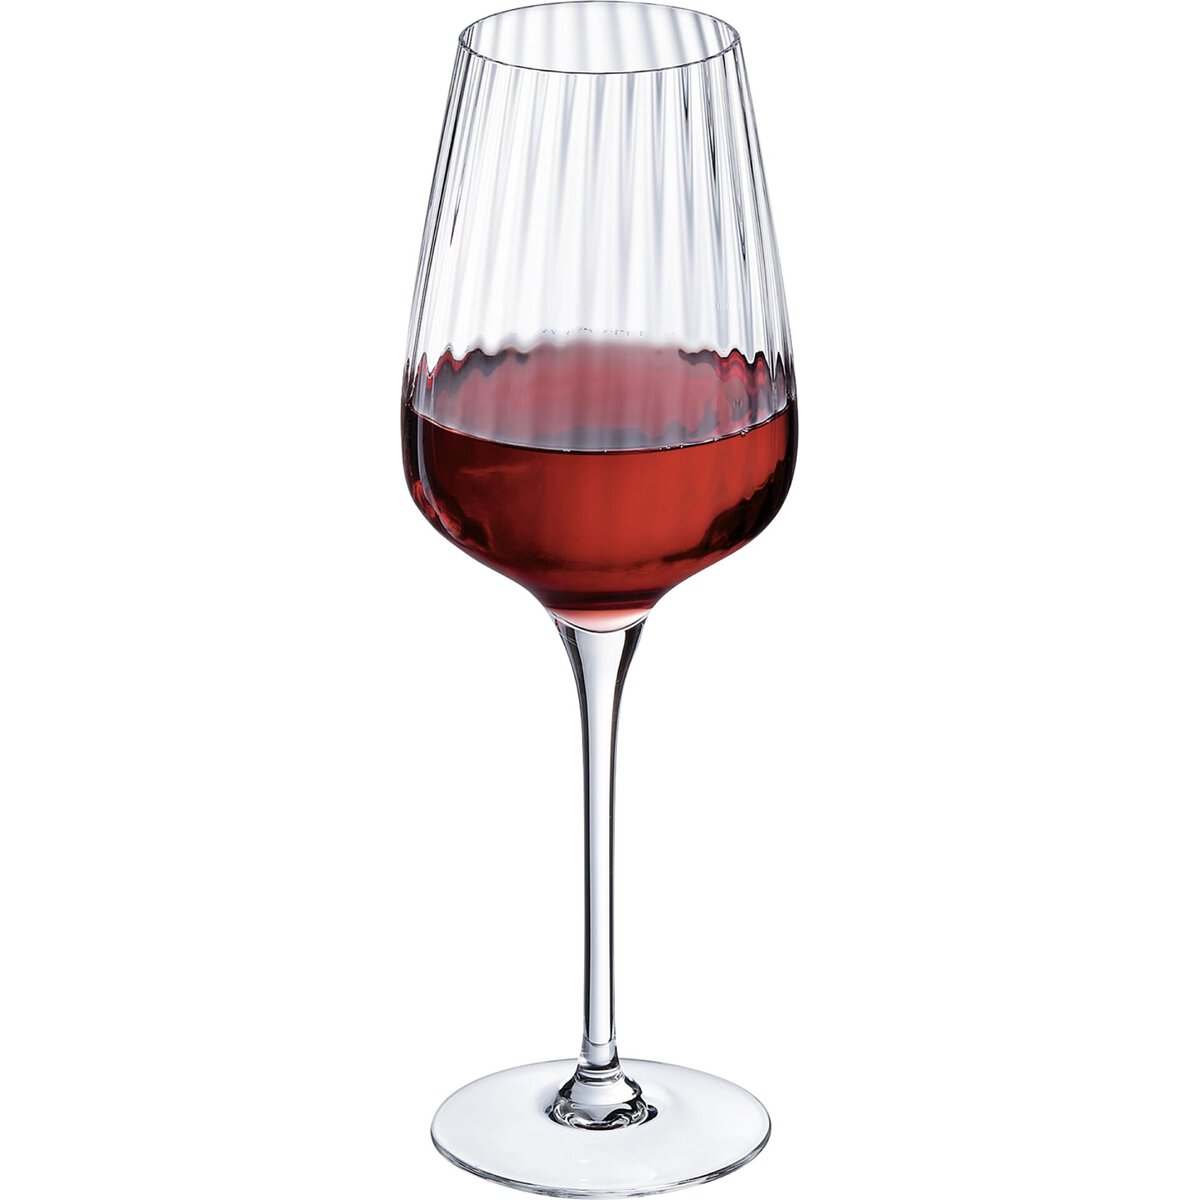 Glasserie "Symetrie" Rotweinglas 475ml mit Füllstrich (2)